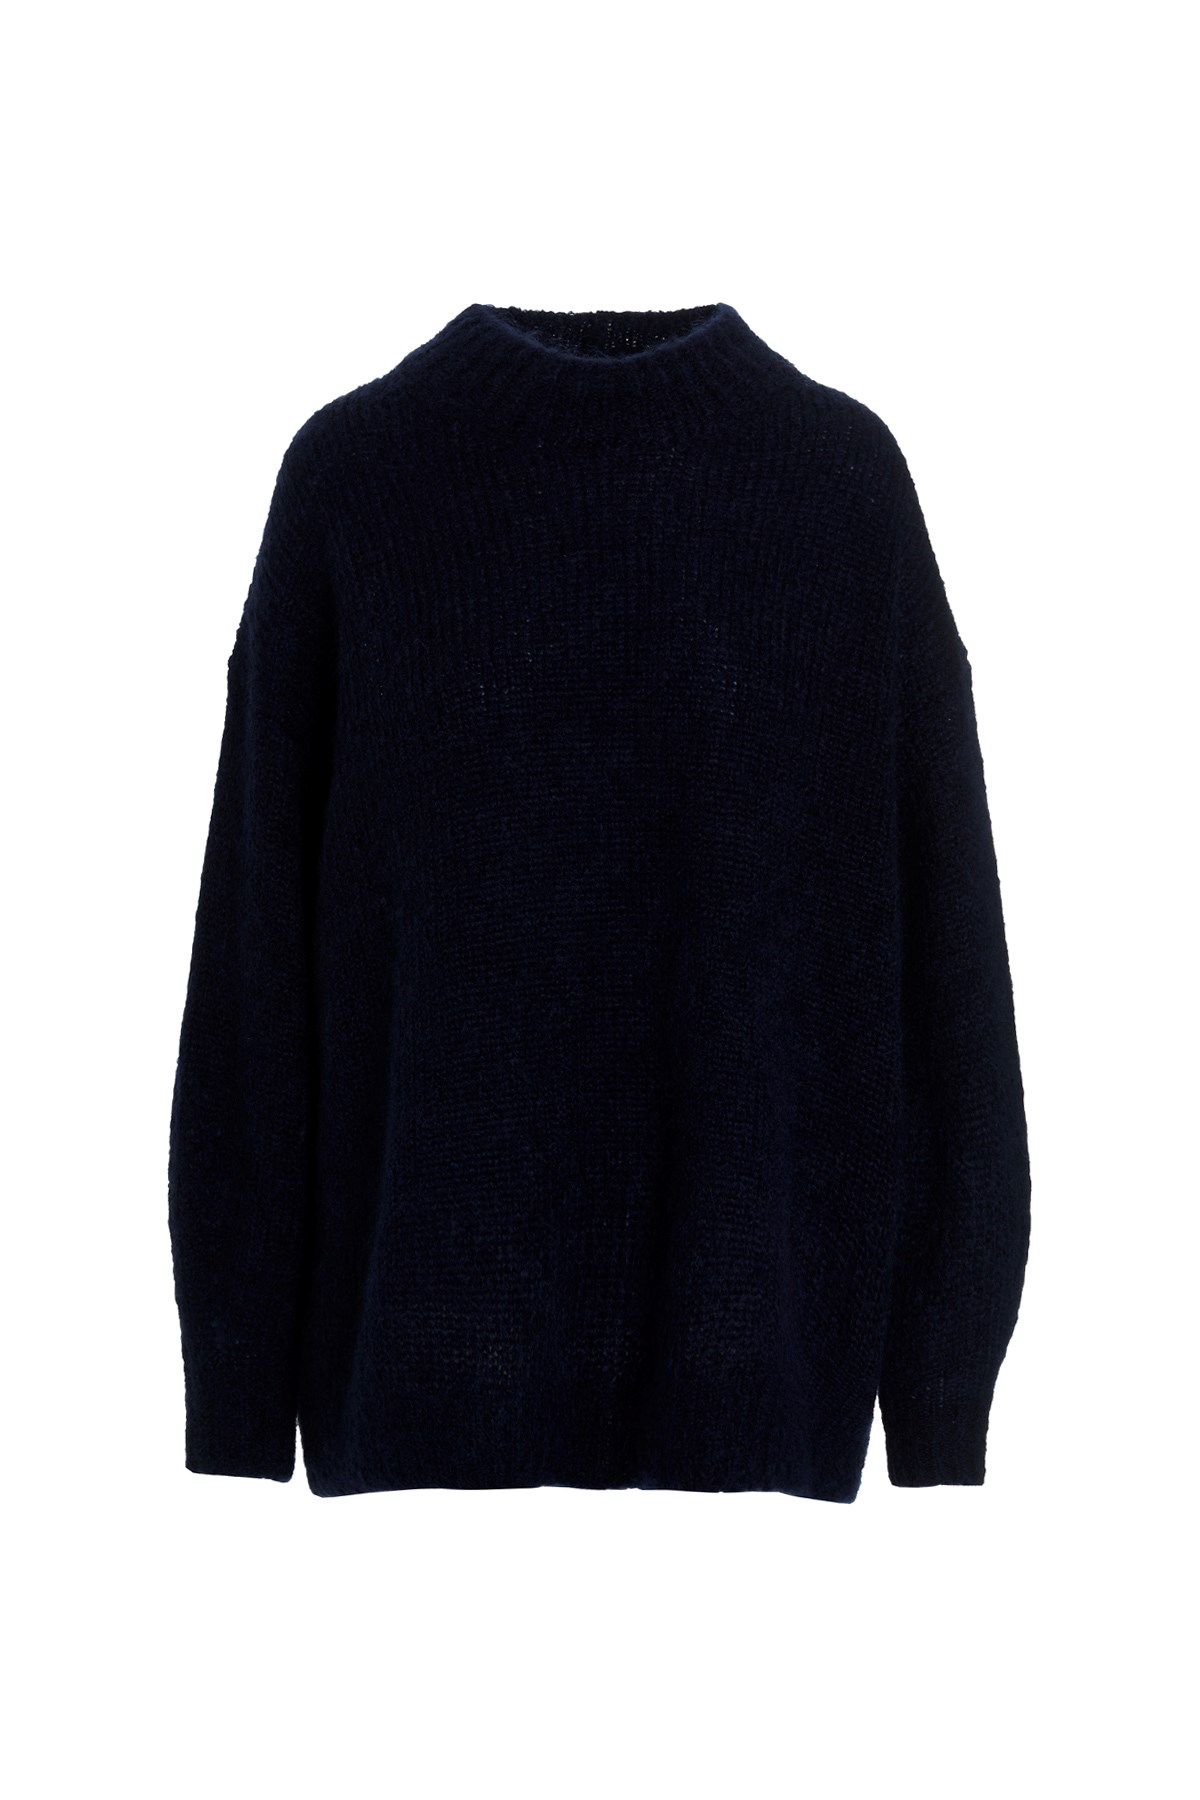 ISABEL MARANT 'Idol’ Sweater